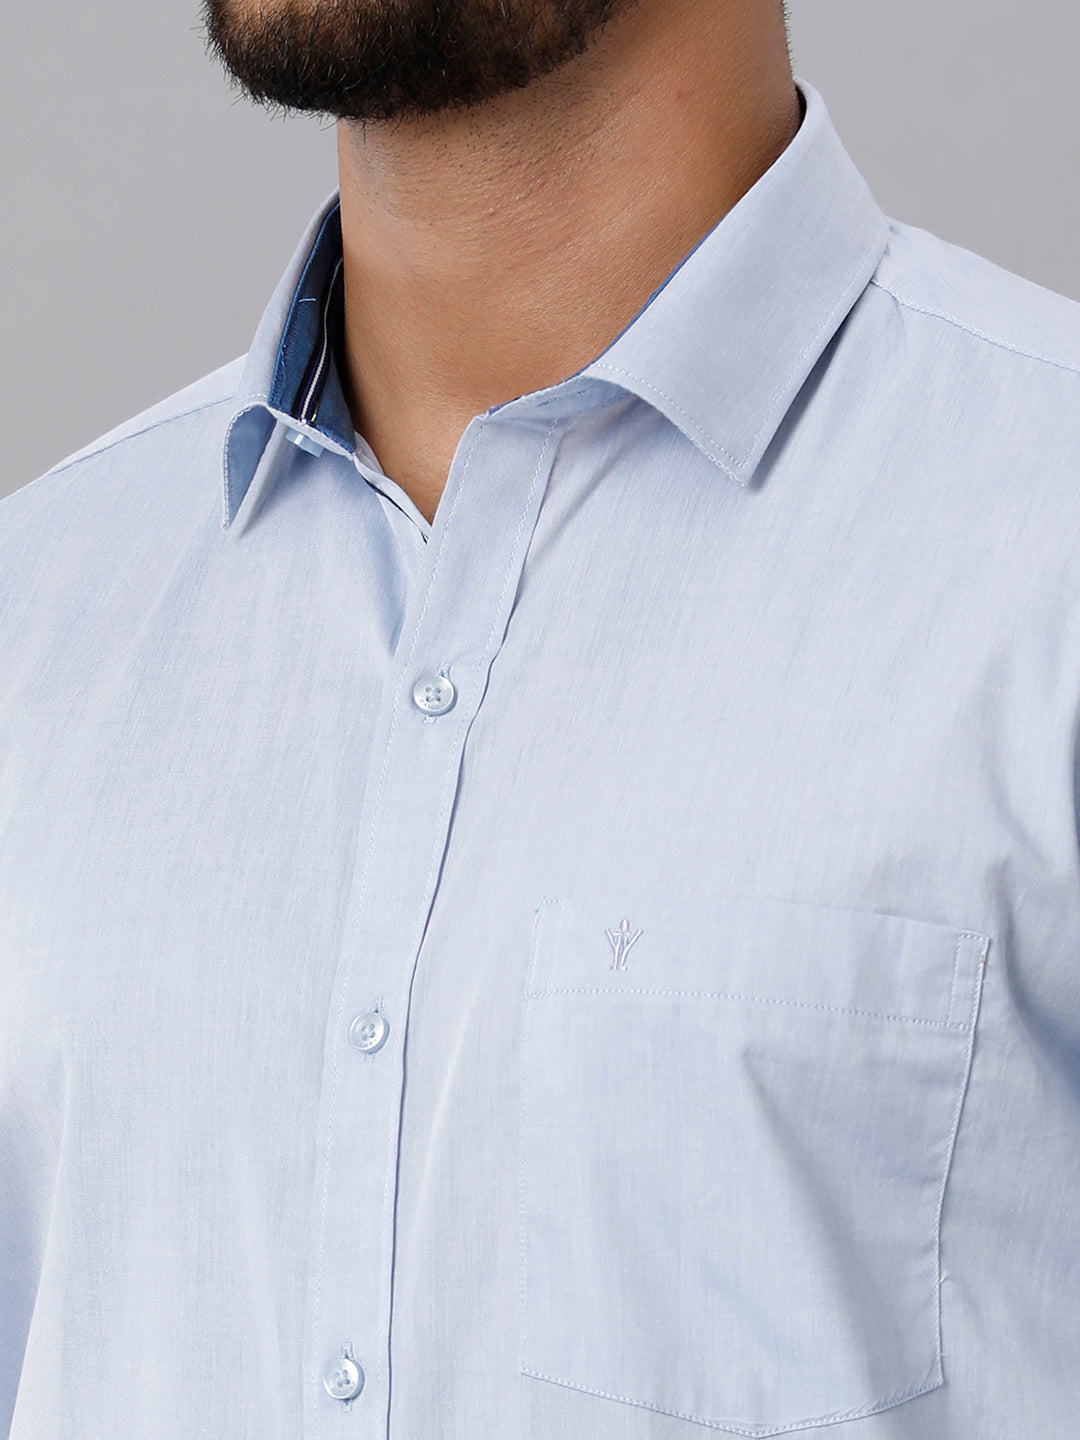 Mens Premium Cotton Formal Shirt Full Sleeves Blue MH G119-Zoom view